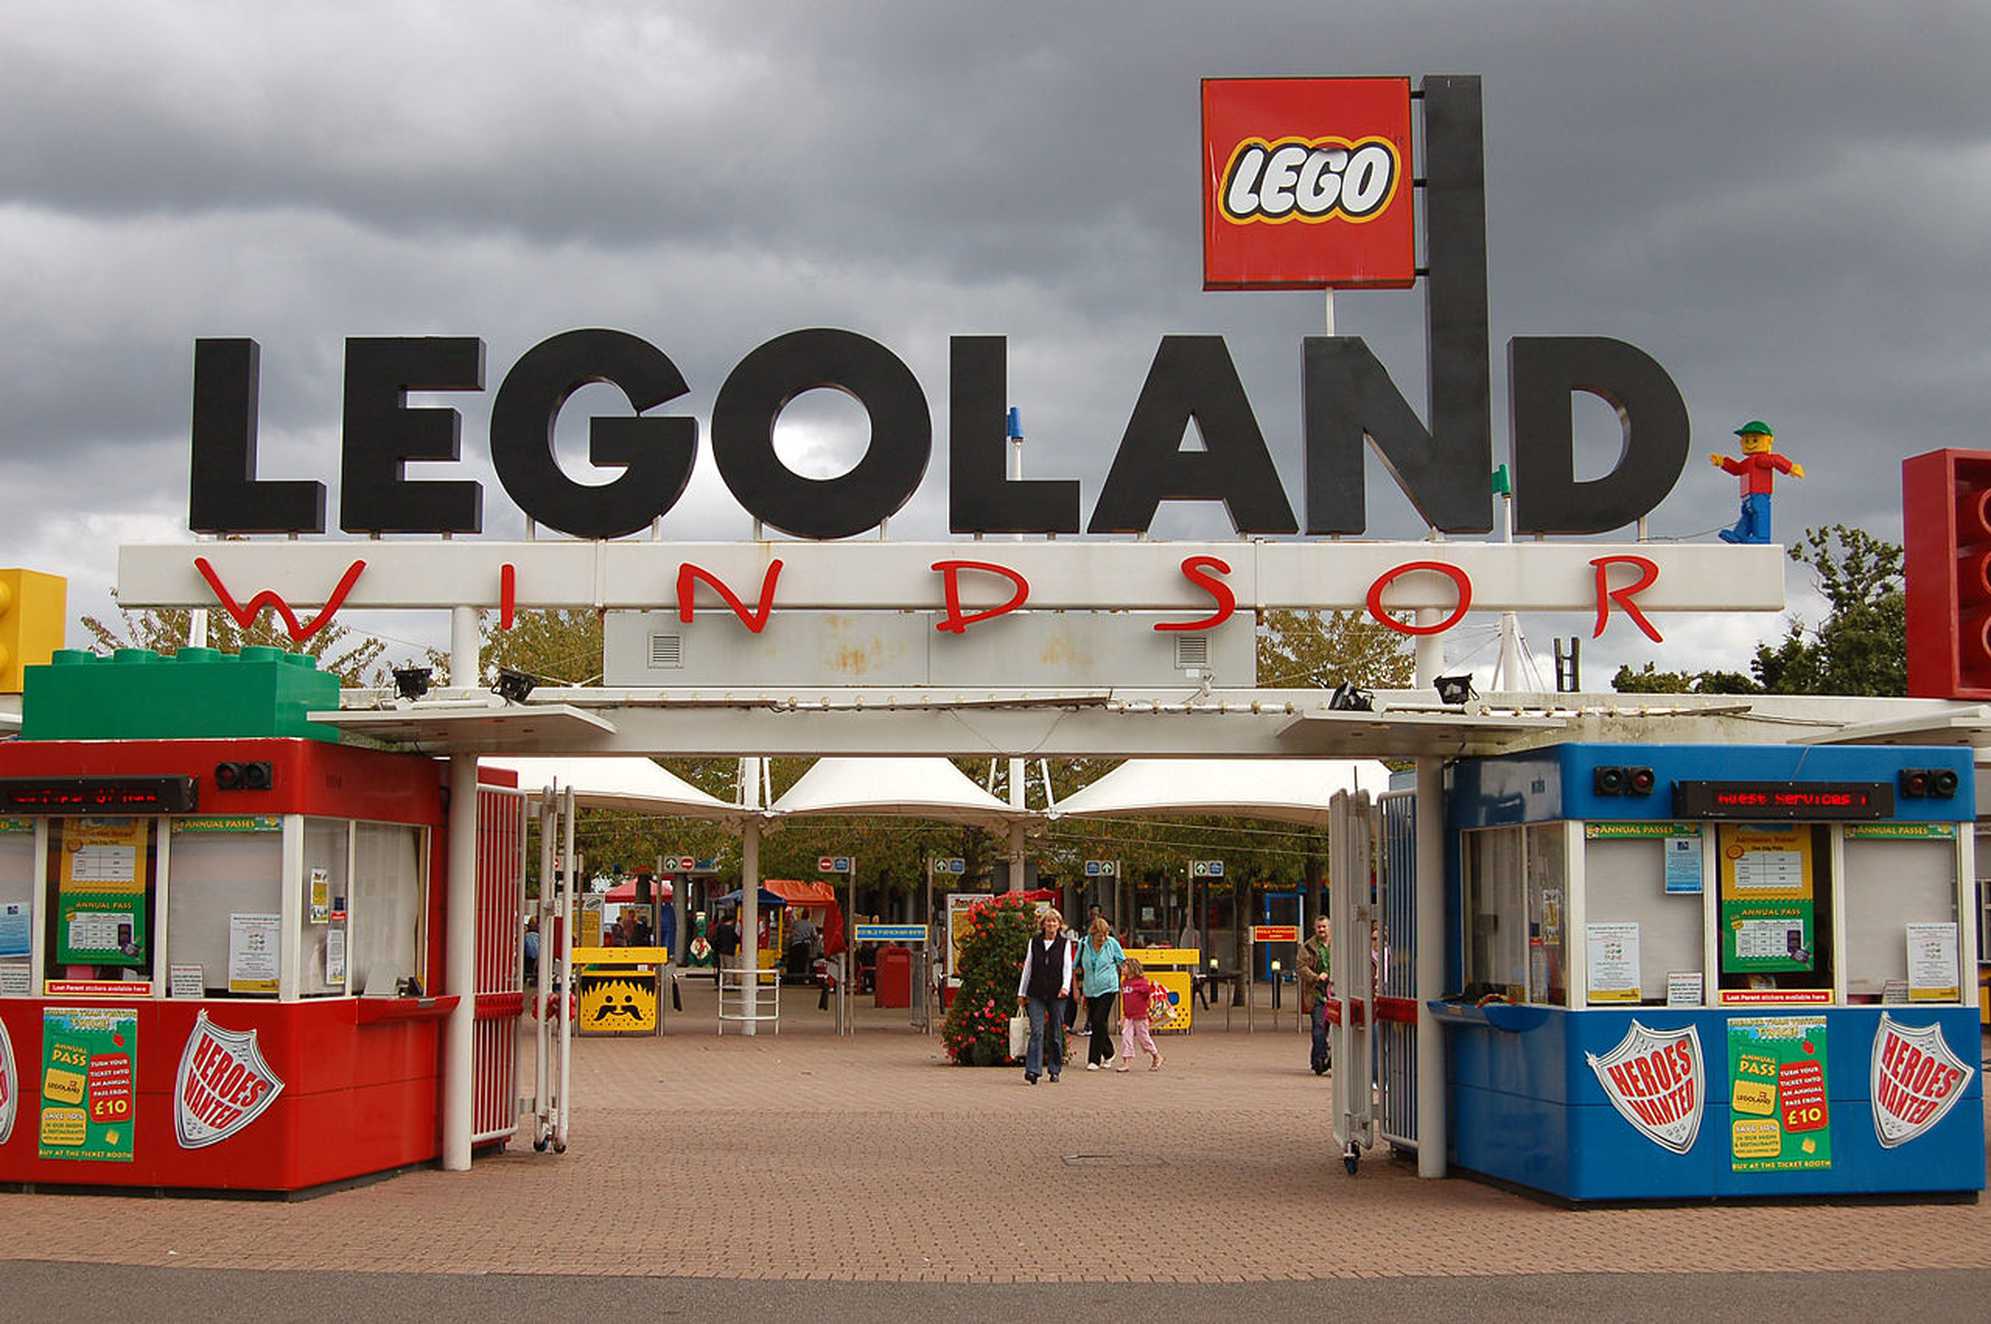 1280px-Entrance_to_Legoland_Windsor.jpg